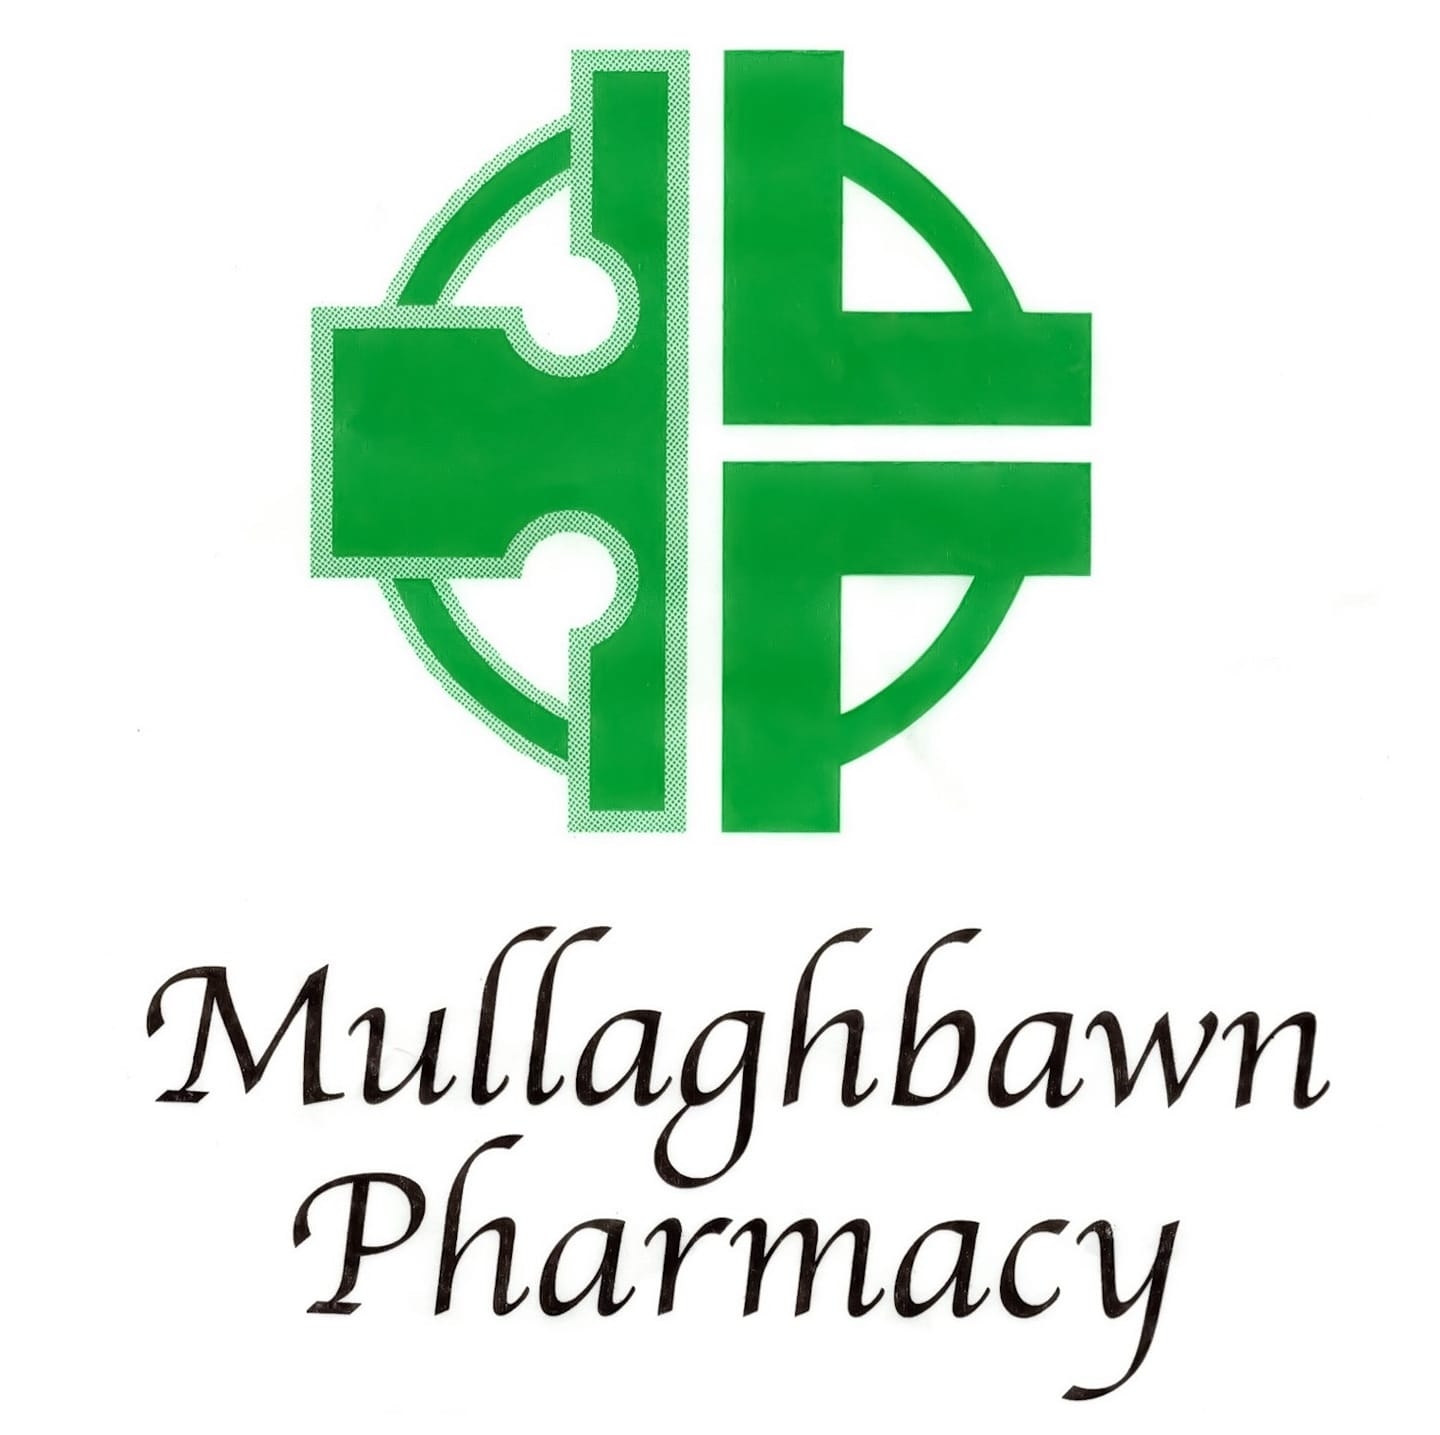 Mullaghbawn Pharmacy